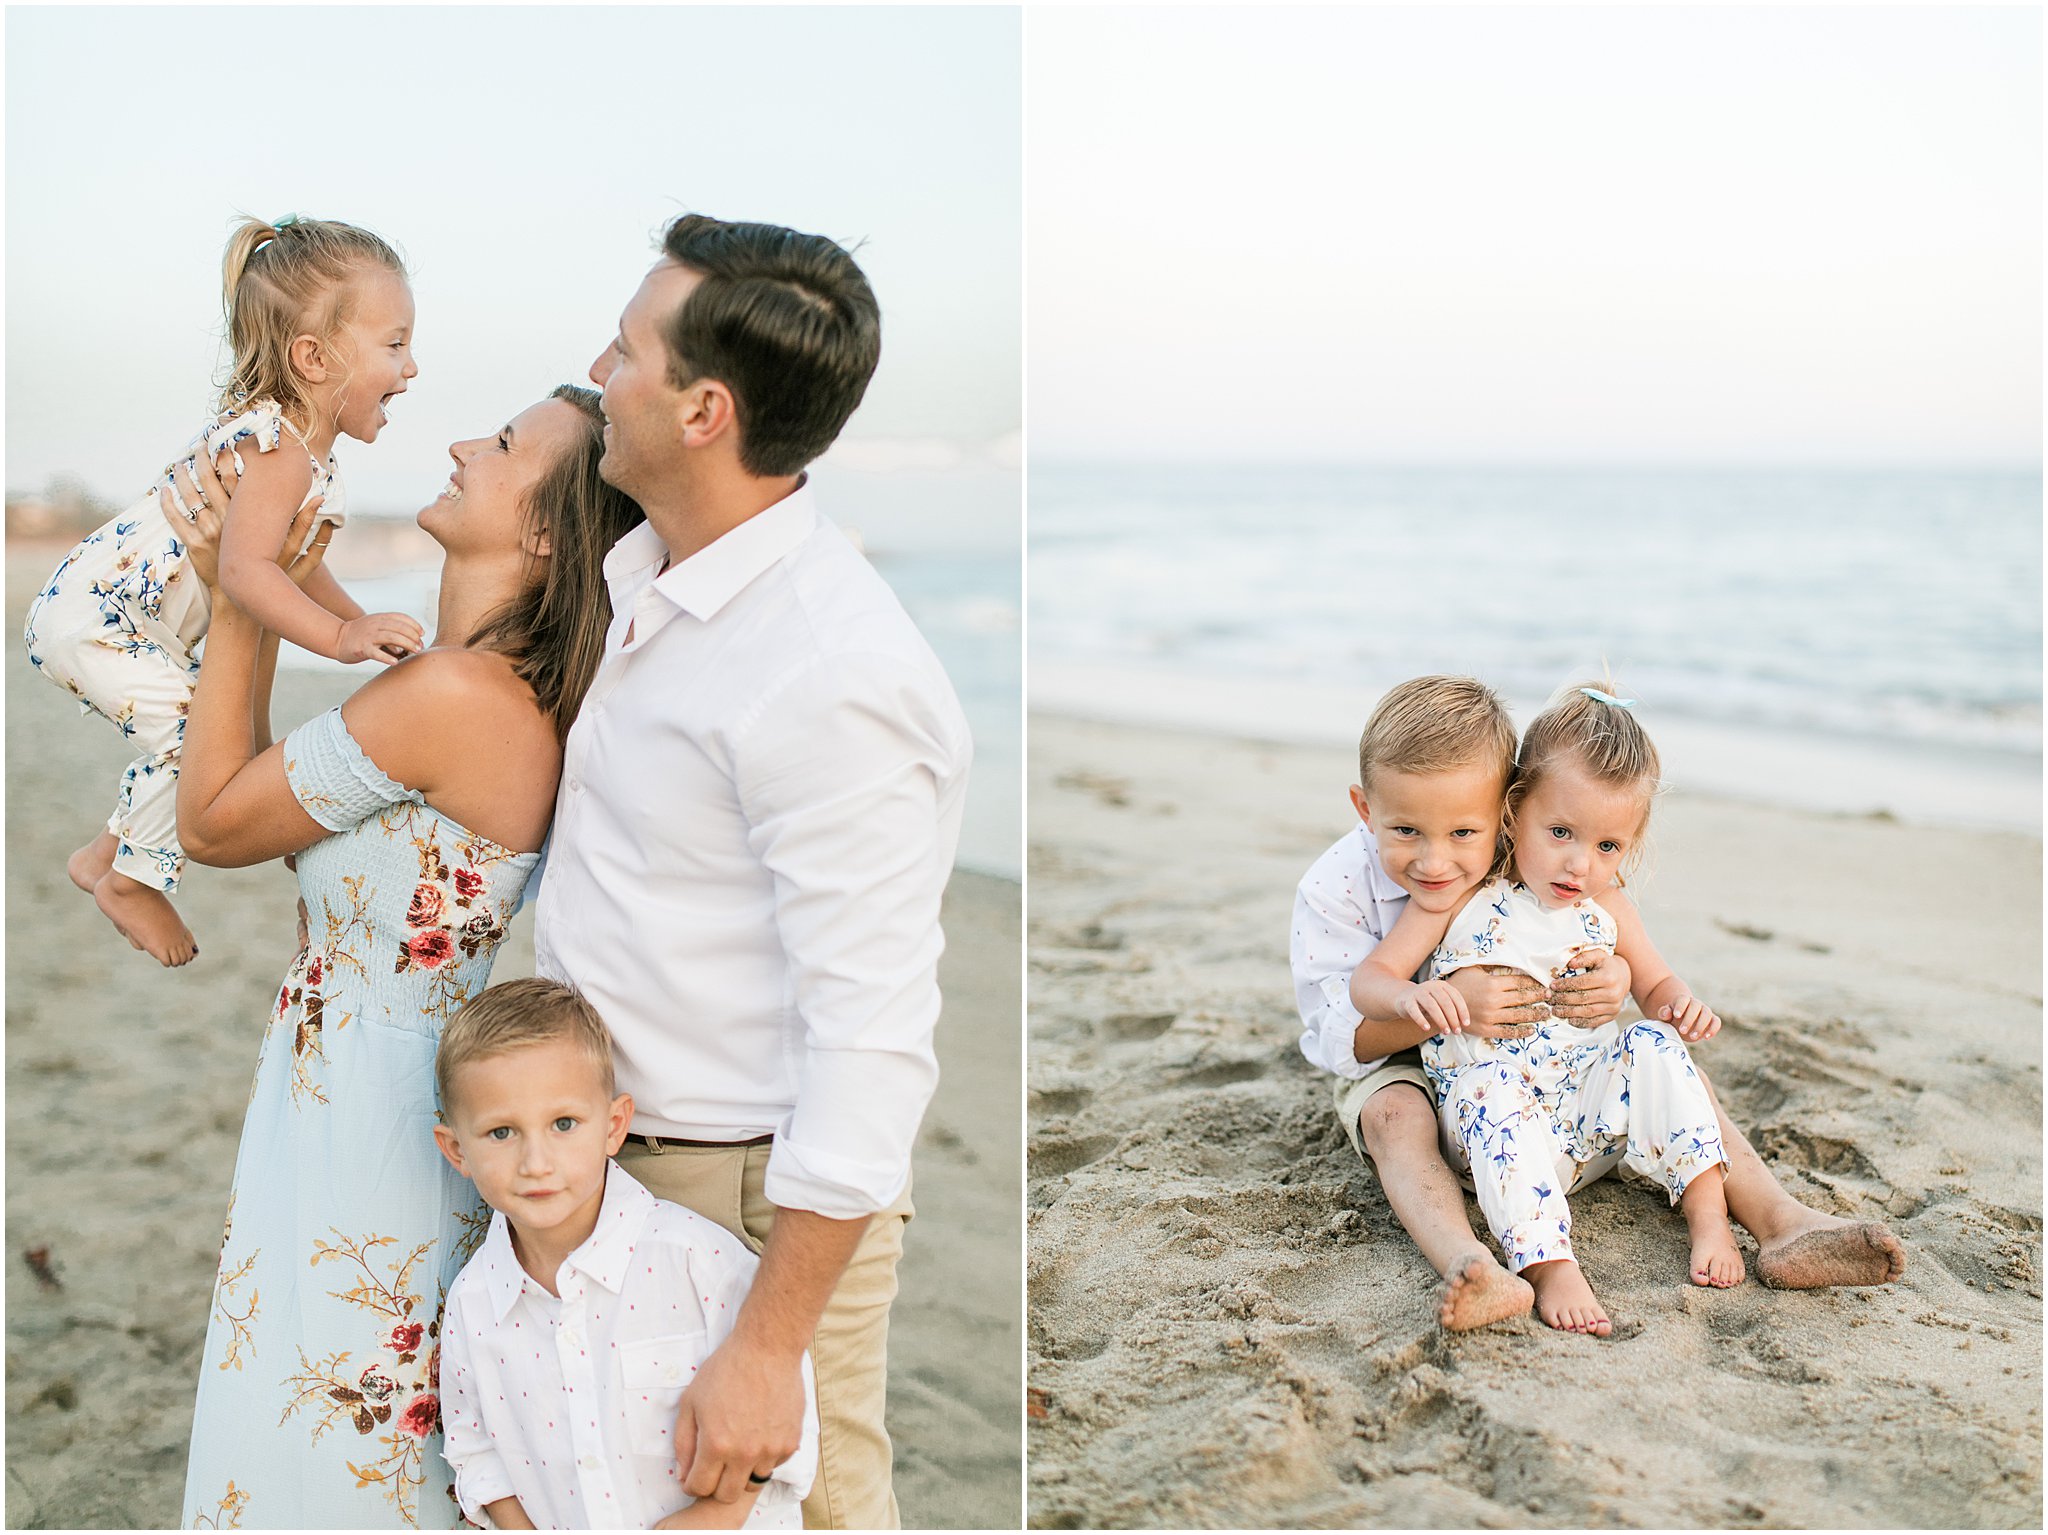 santa cruz beach family portrait session california wedding photographer angela sue photography_0027.jpg